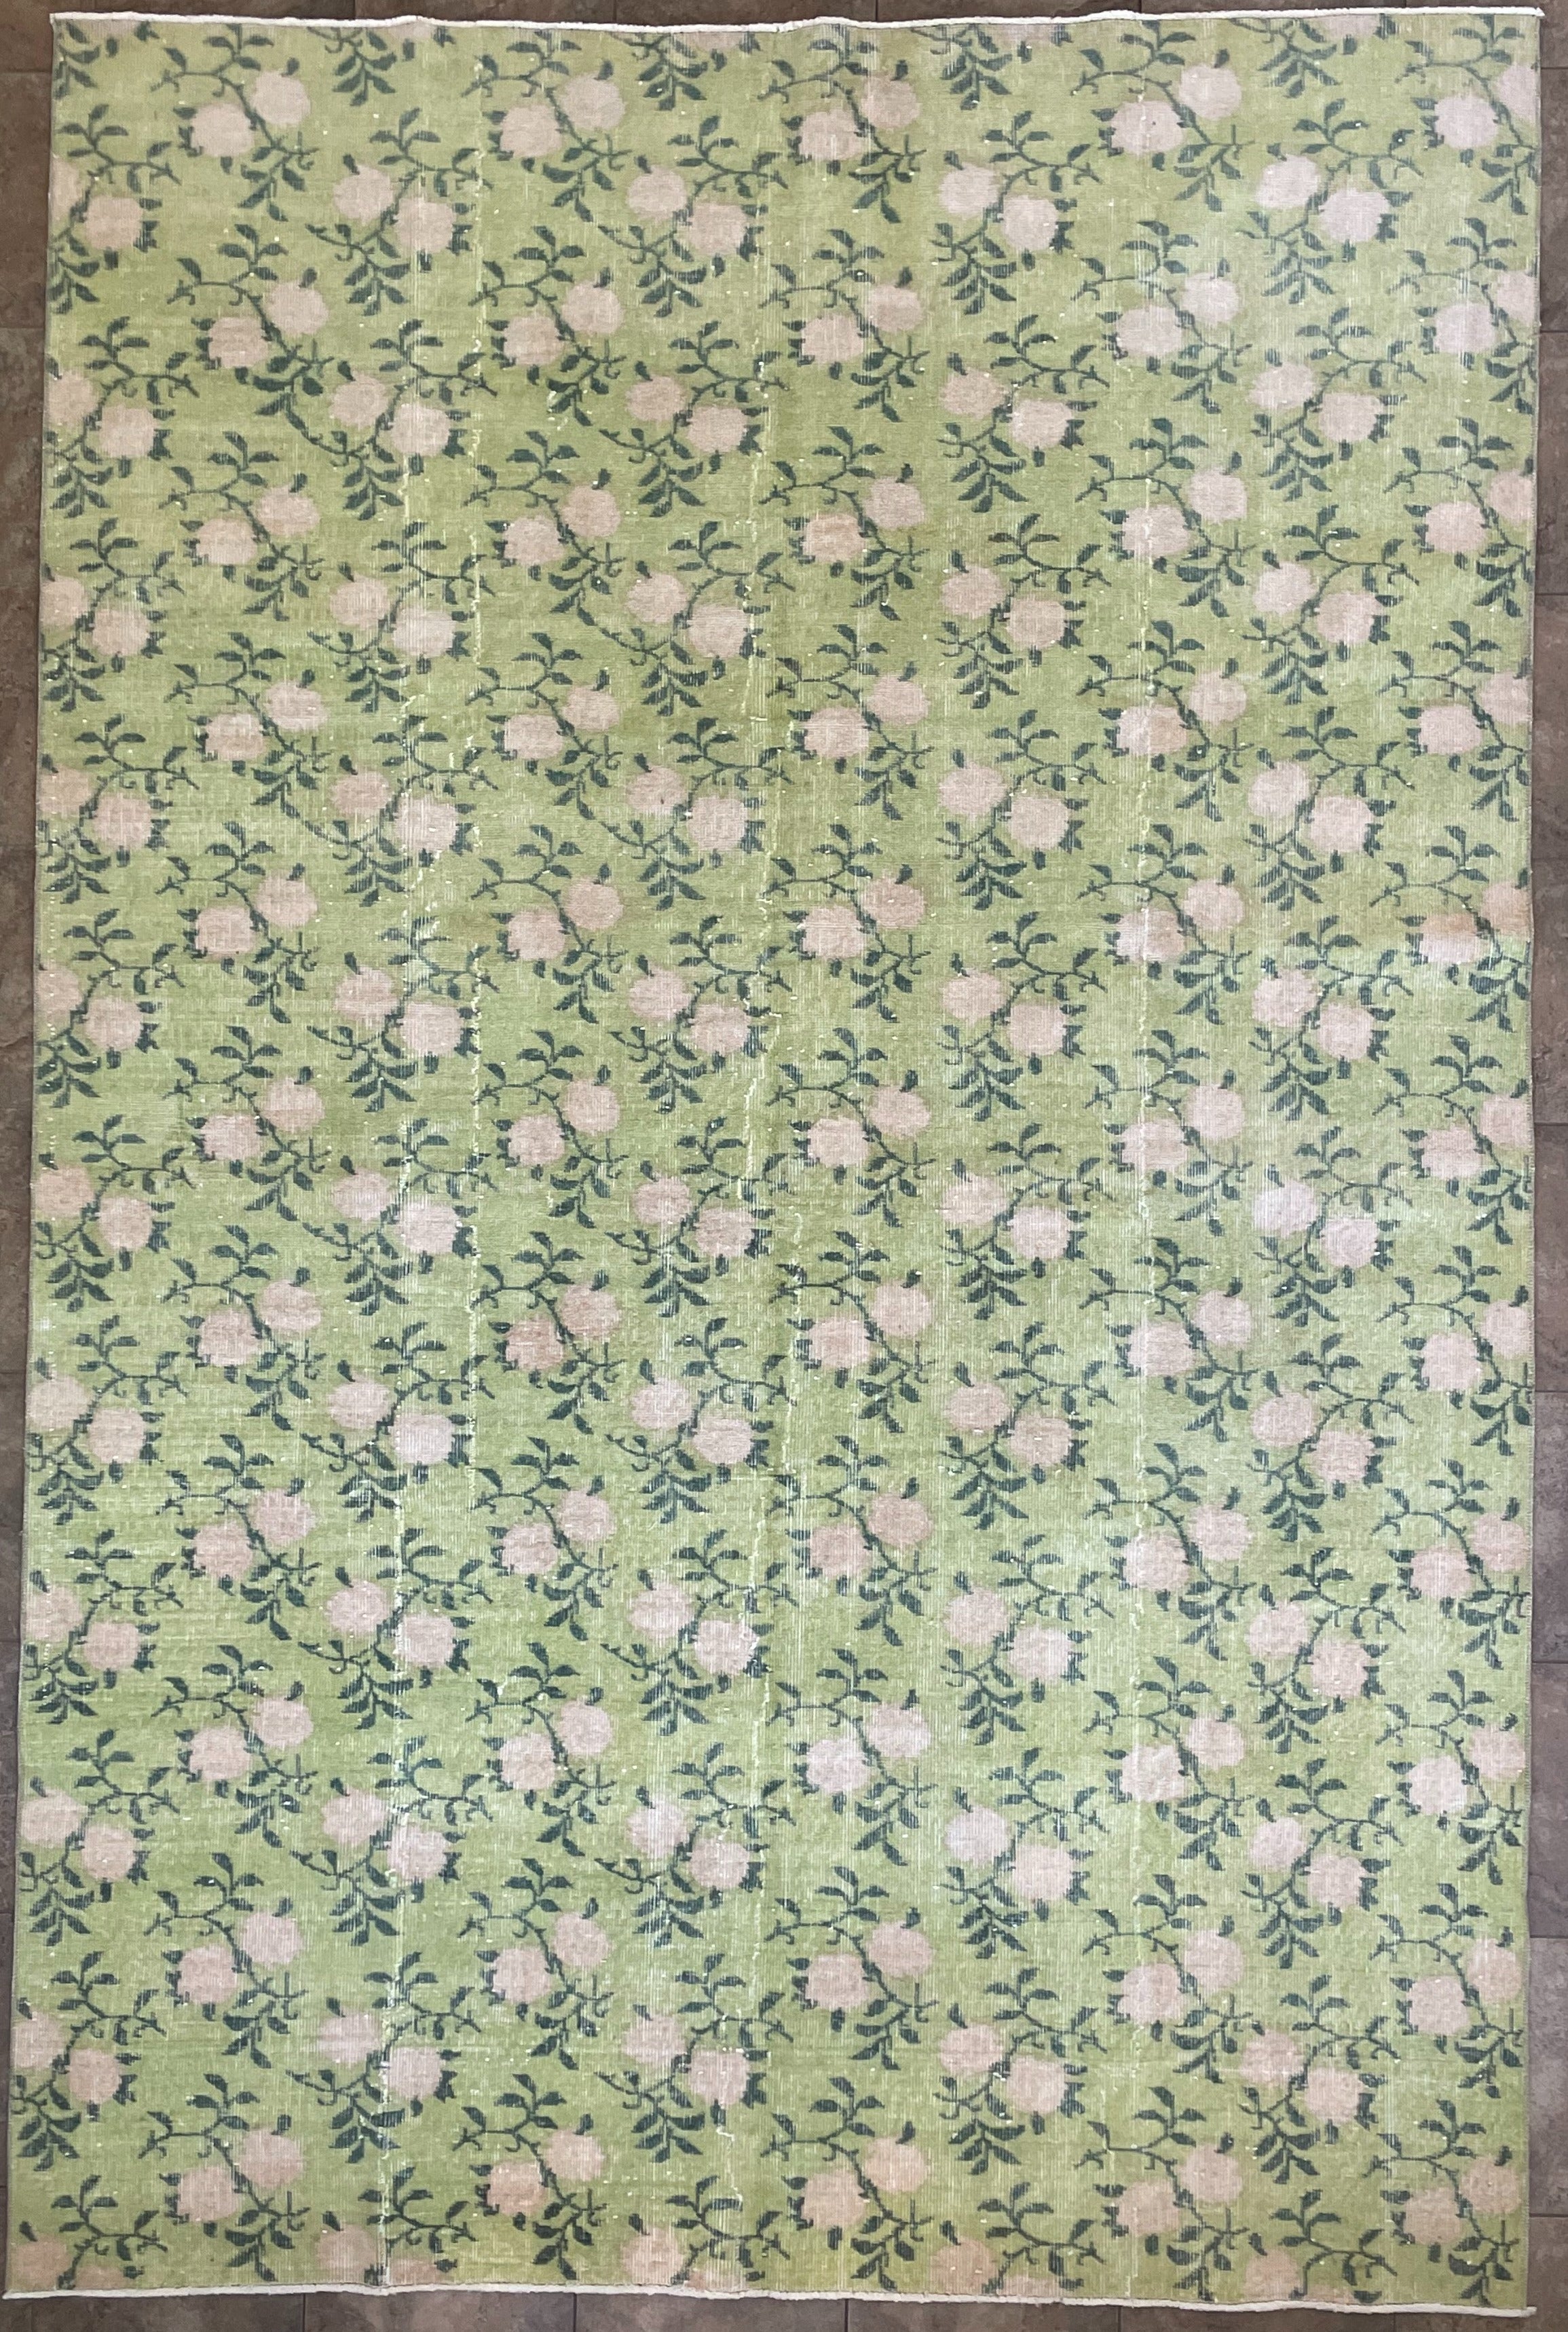 green and pink rose patterned vintage rug - 6’-8” x 10’-0”